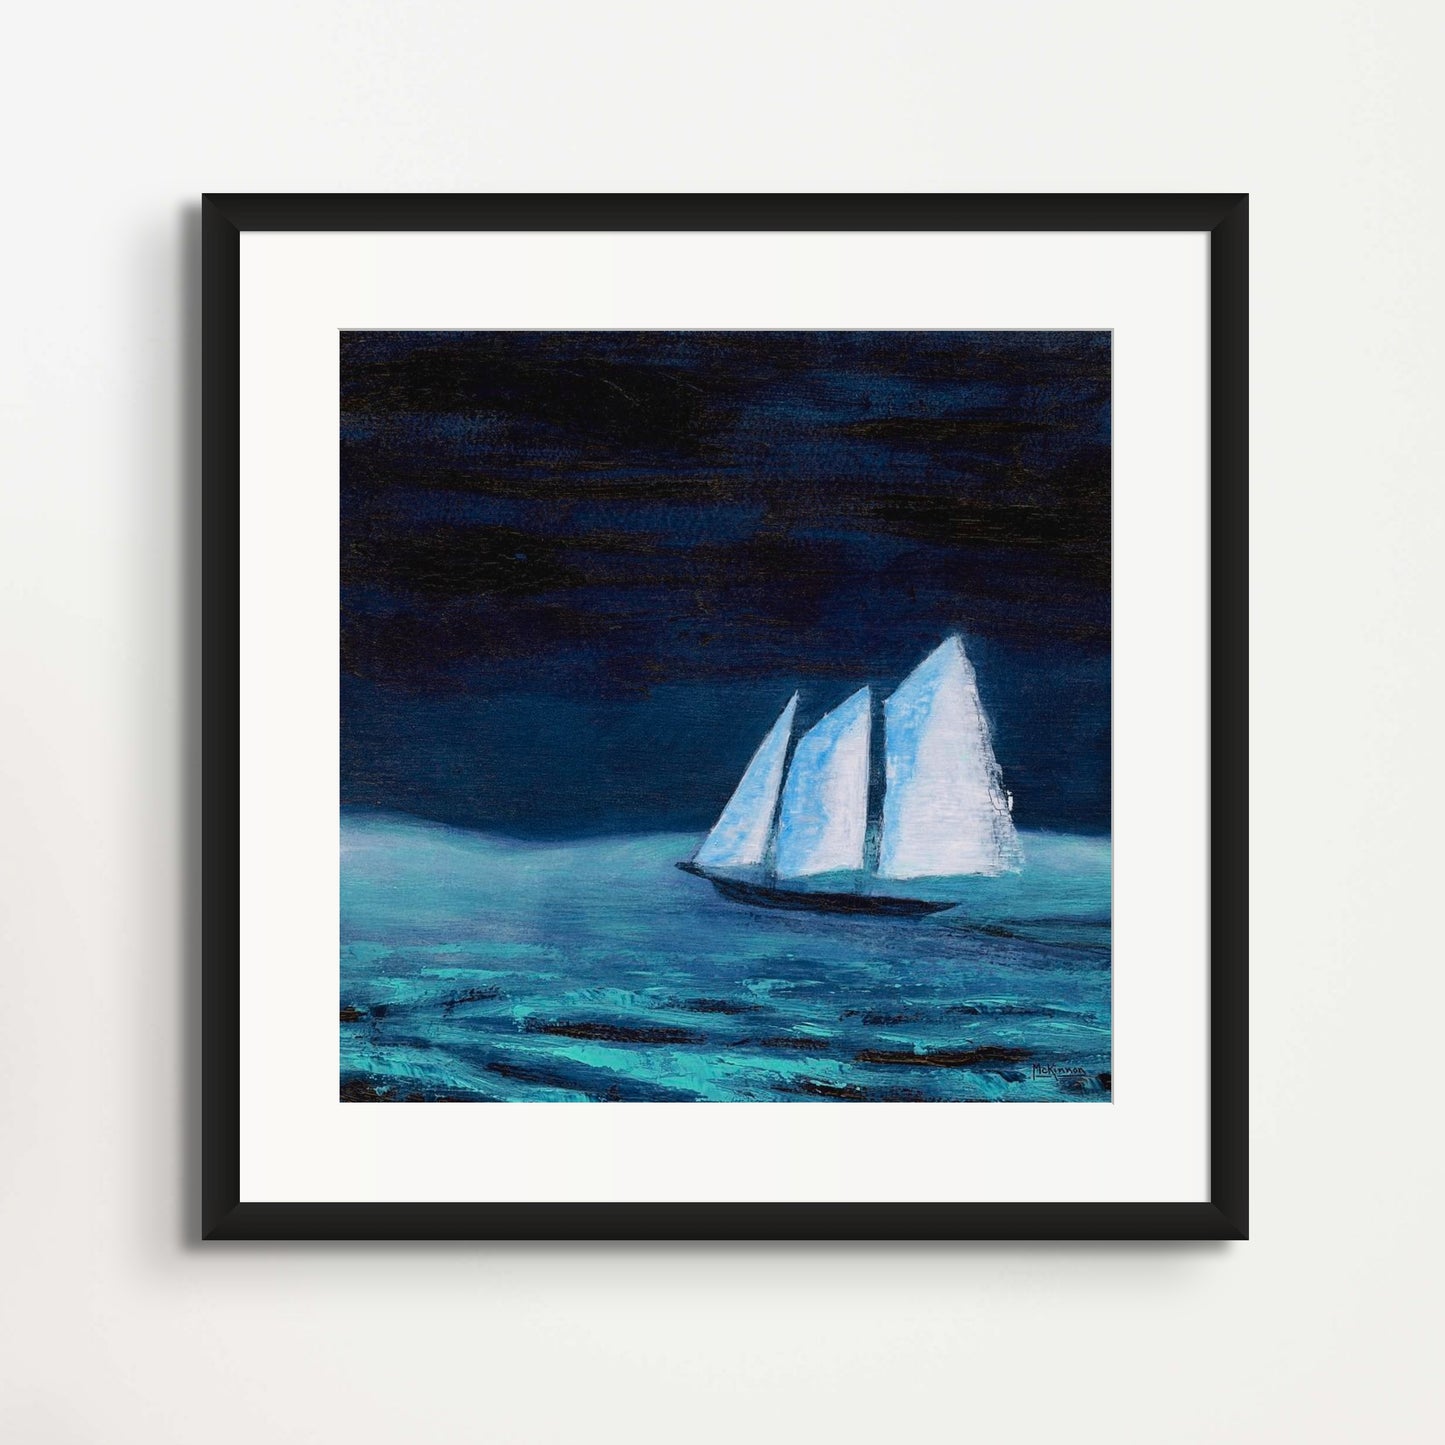 Marine Painter - Large Modern Schooner under Sail Painting - Original Coastal Wall Art Framed Print